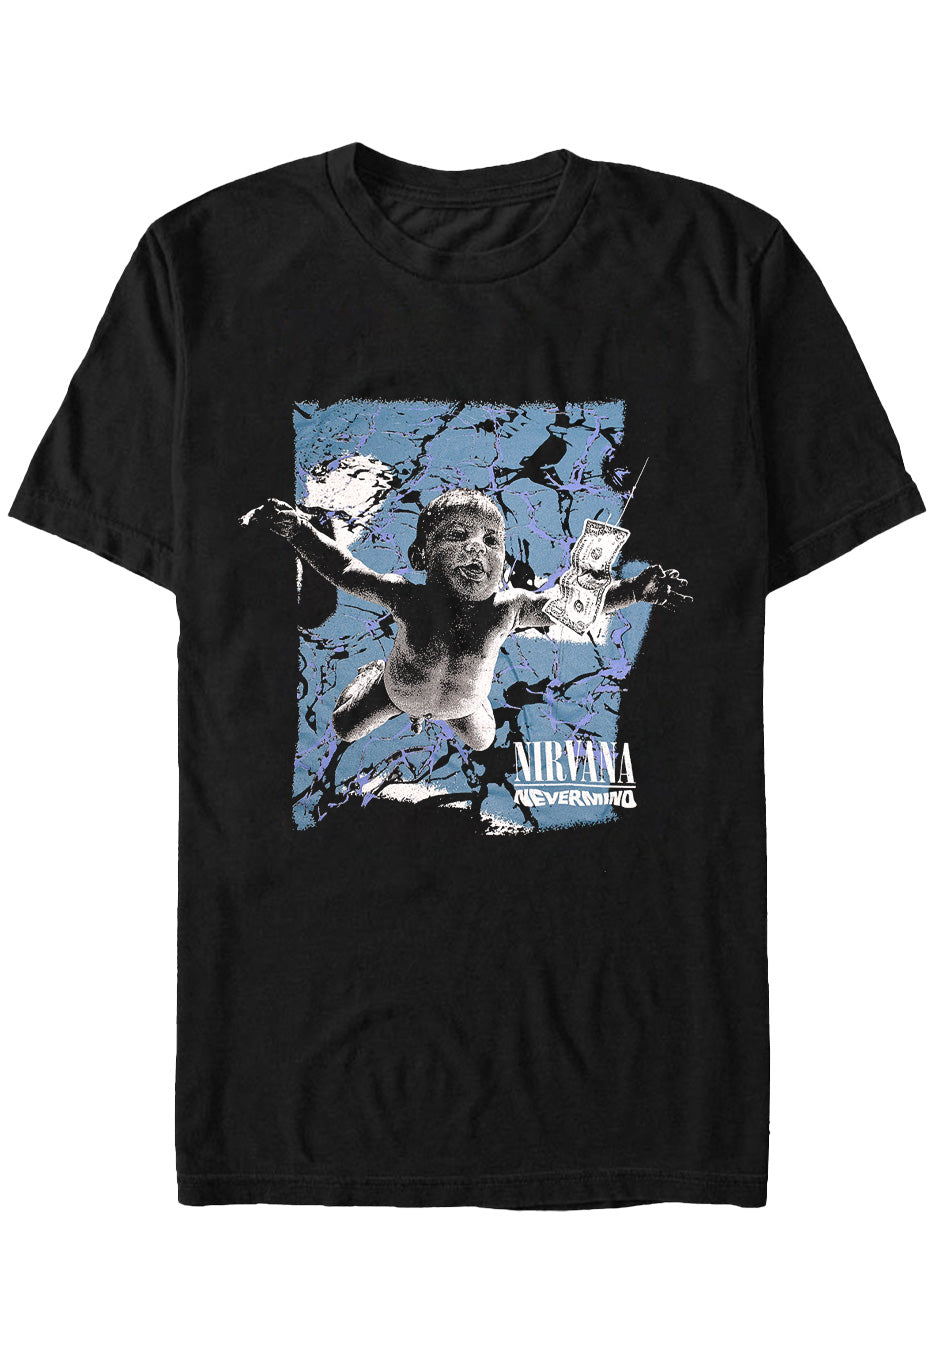 Nirvana - Nevermind Cracked - T-Shirt